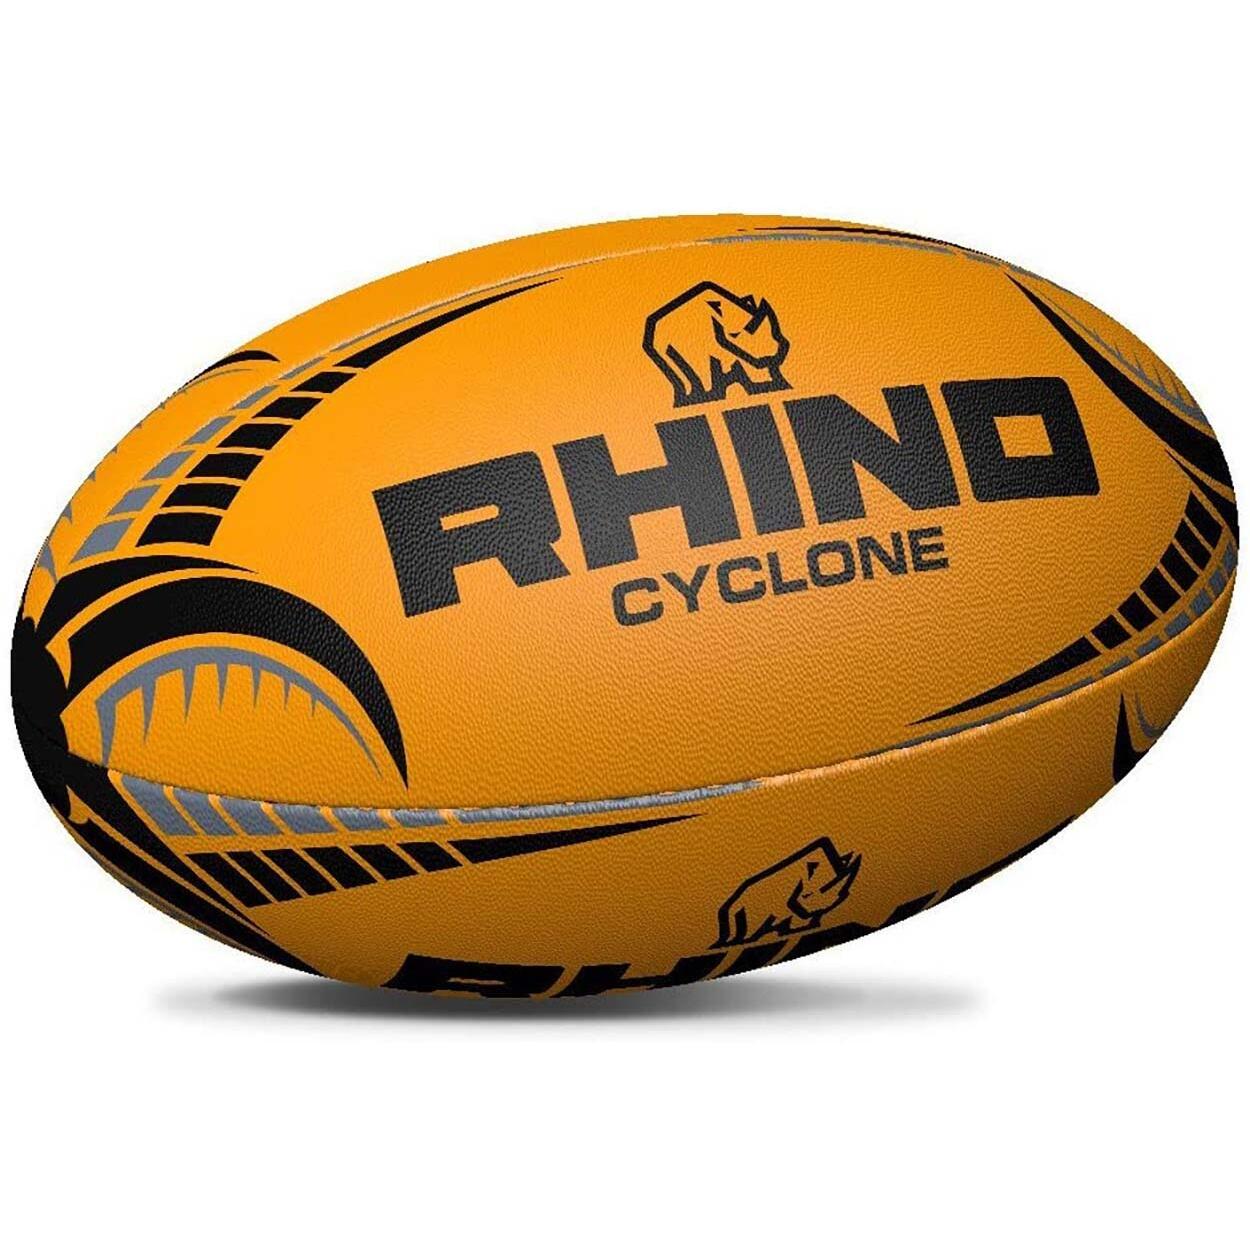 Cyclone Rugby Ball (Fluorescent Orange) 4/4